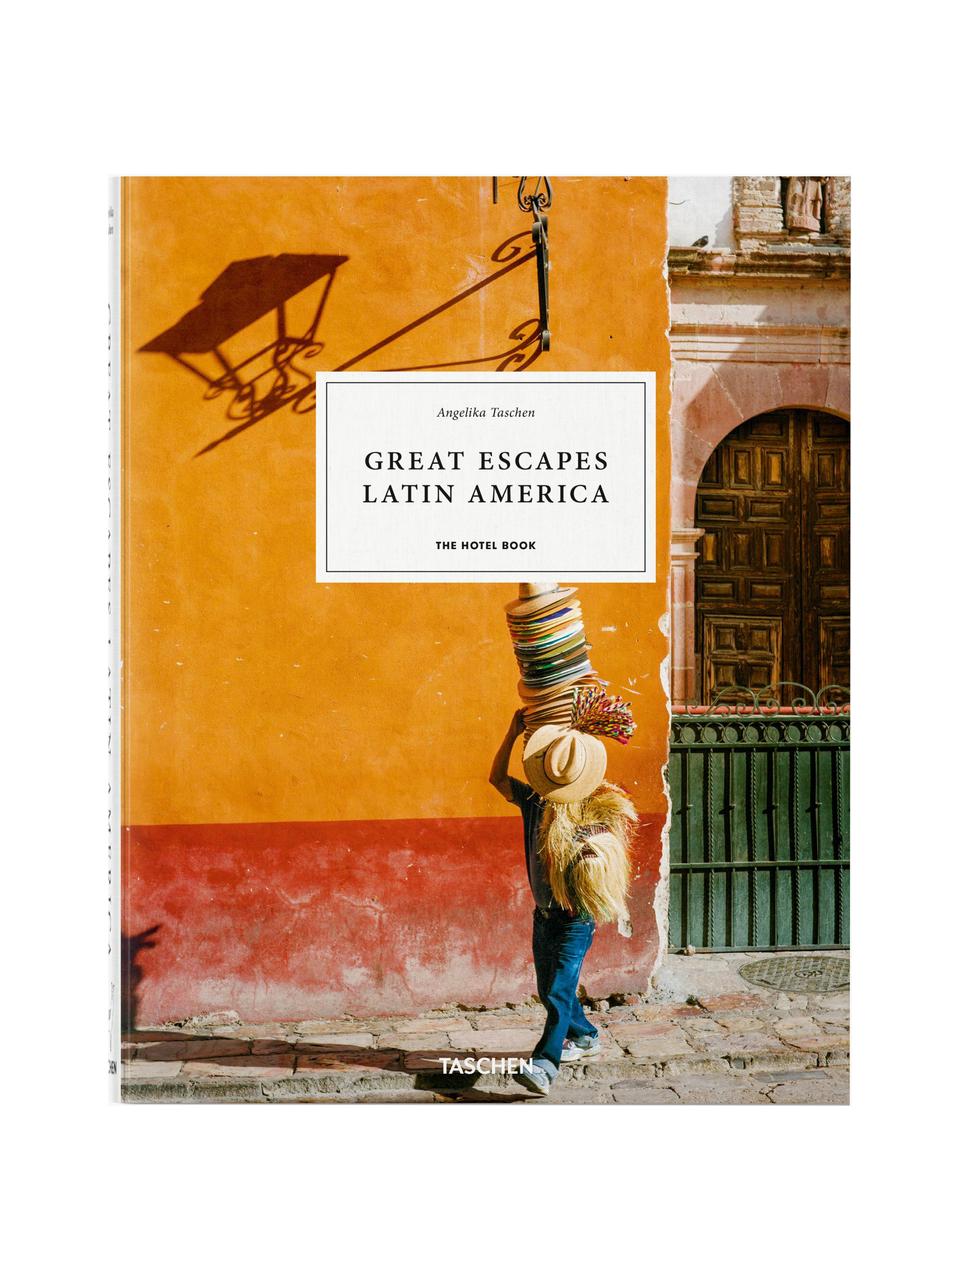 Libro ilustrado Great Escapes Latin America, Papel, tapa dura, Latin America, An 24 x Al 30 cm